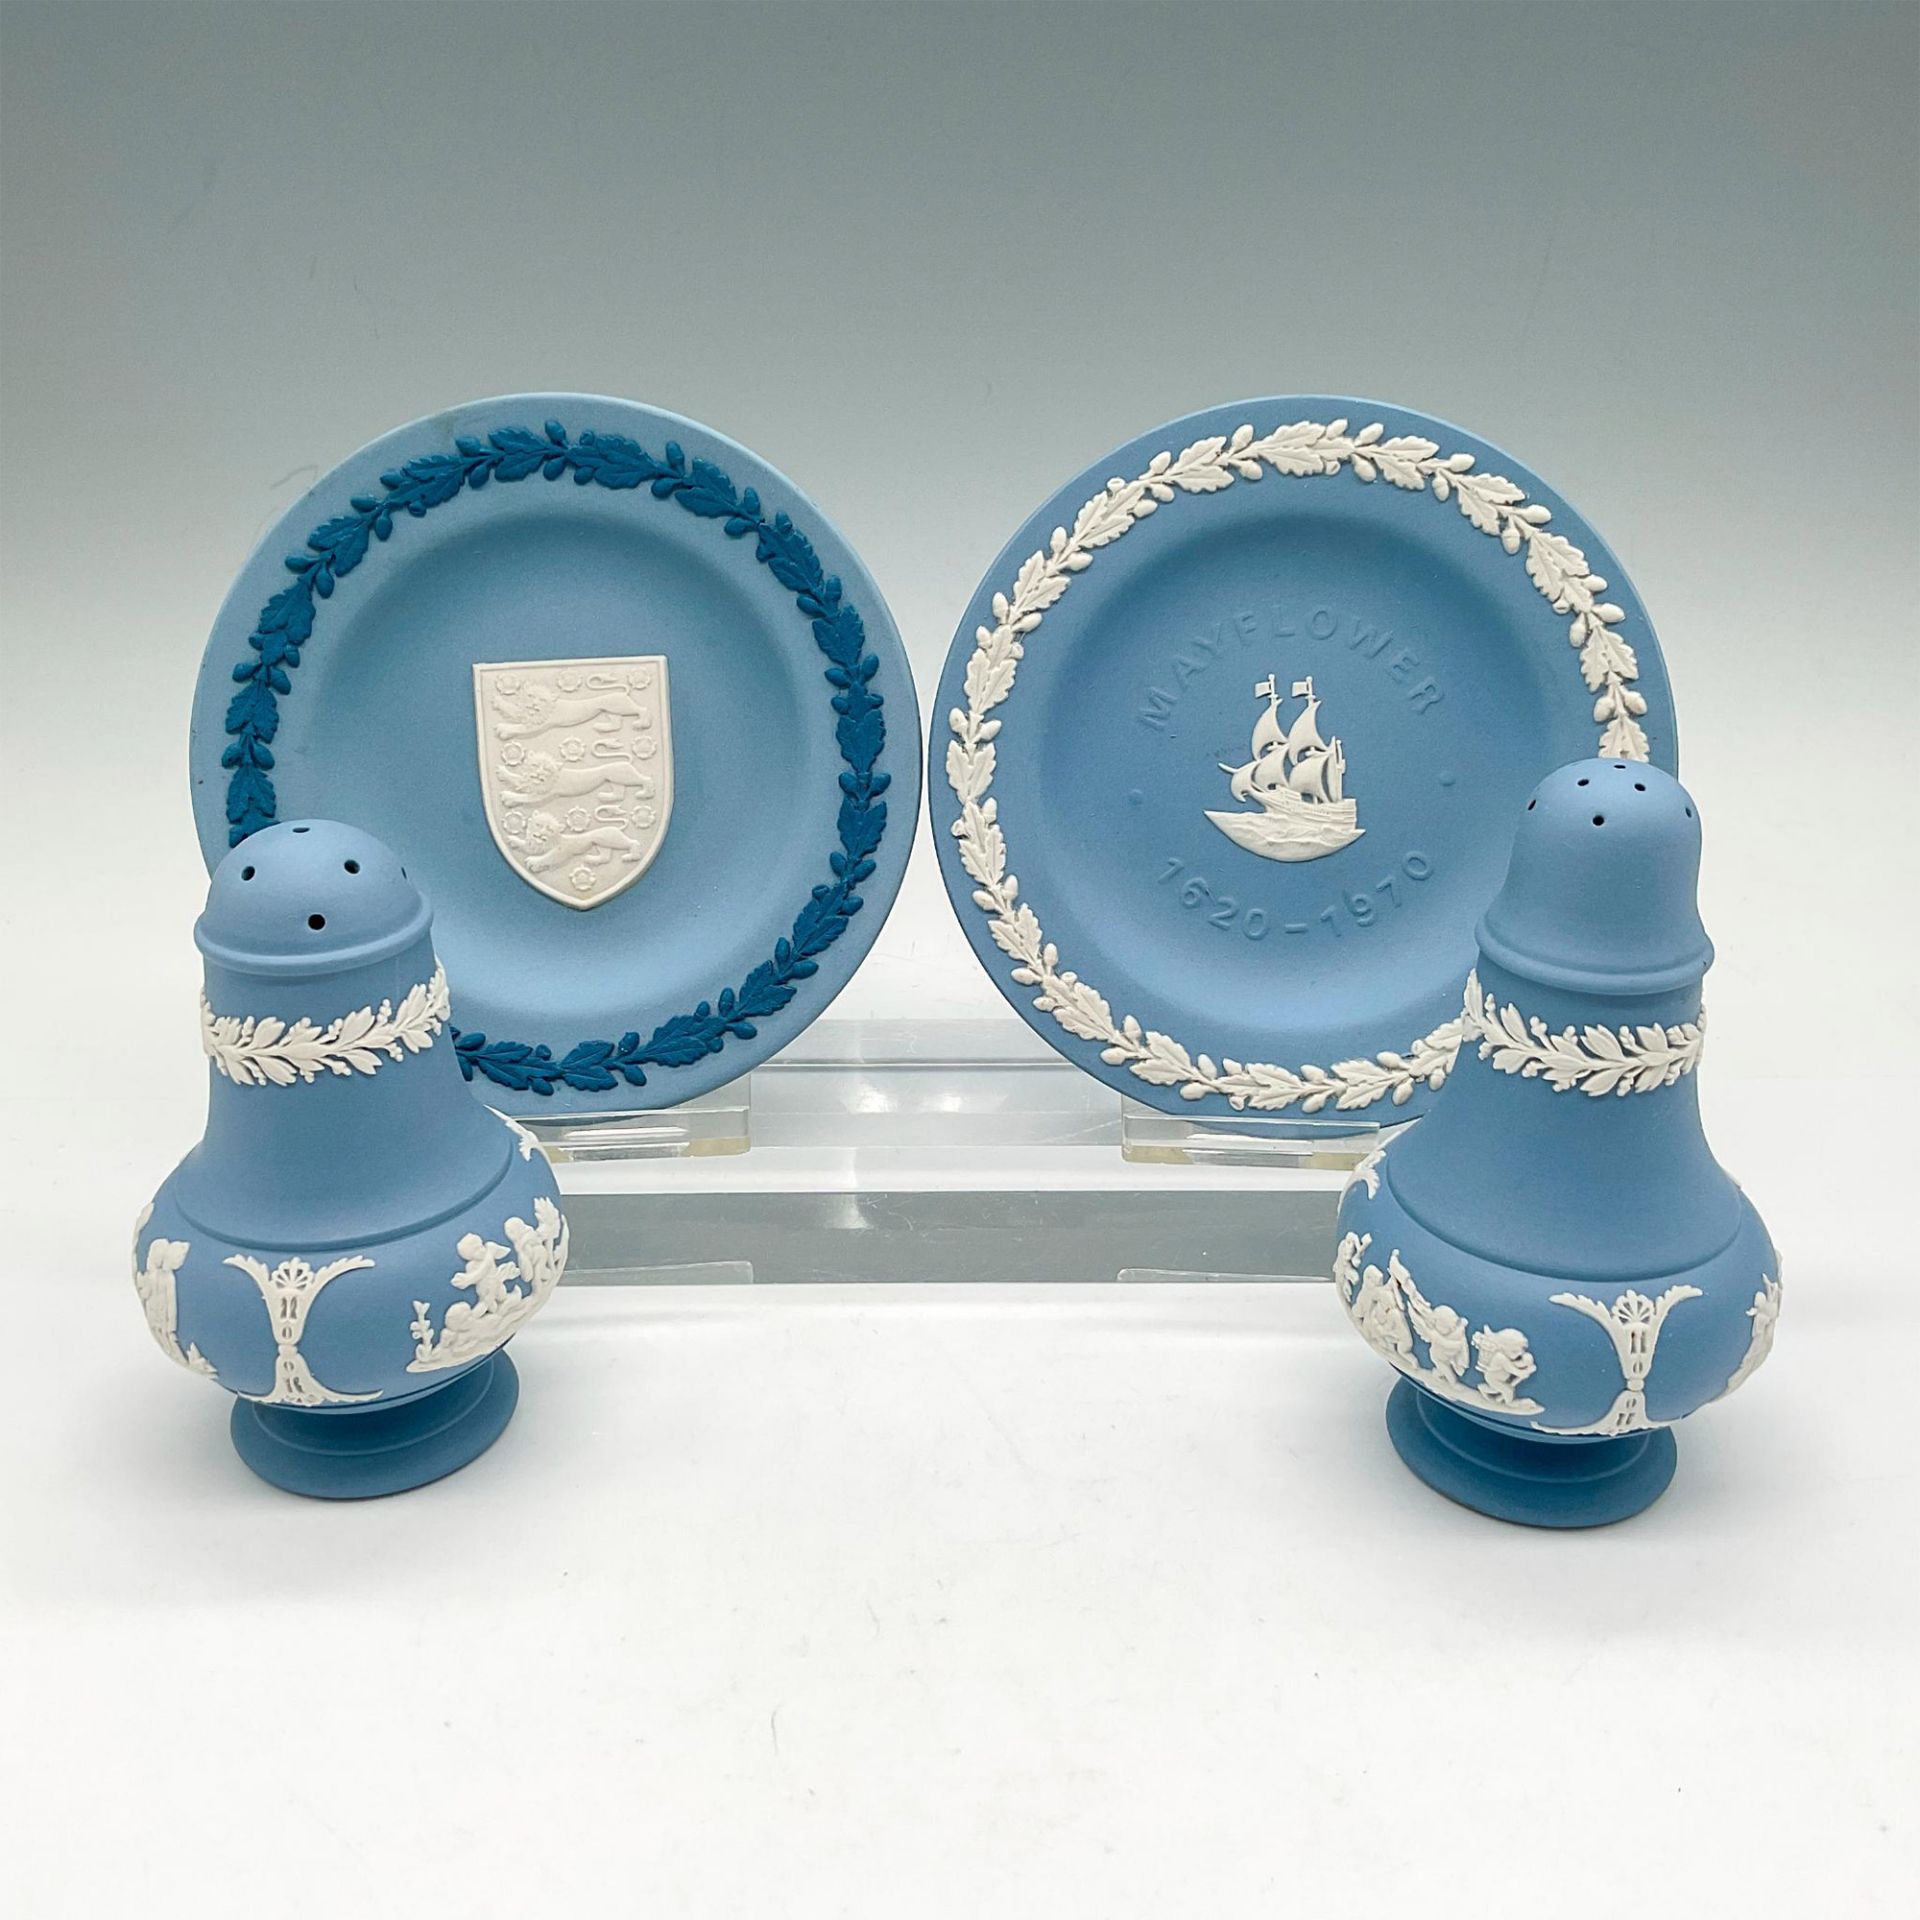 4pc Wedgwood Blue Jasperware Shakers + Display Dishes - Image 2 of 3